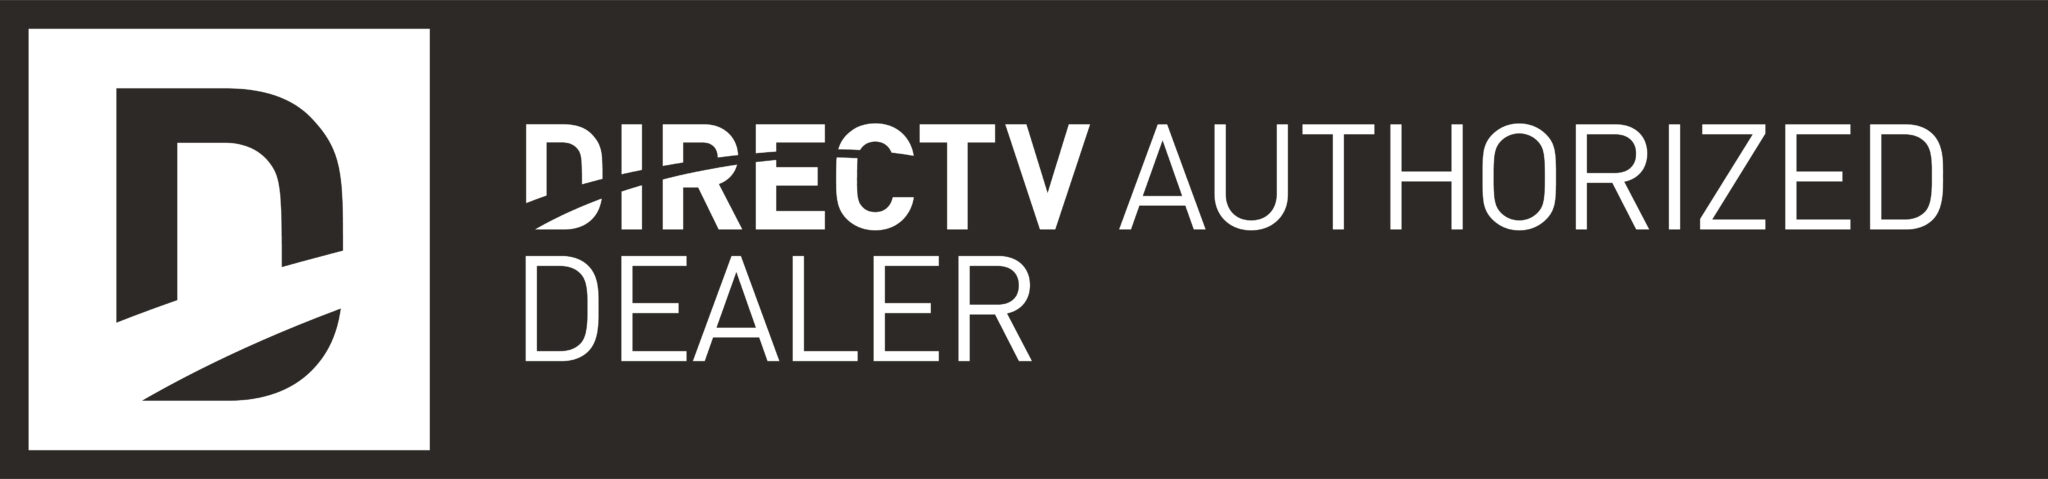 DirecTV authorized dealer logo